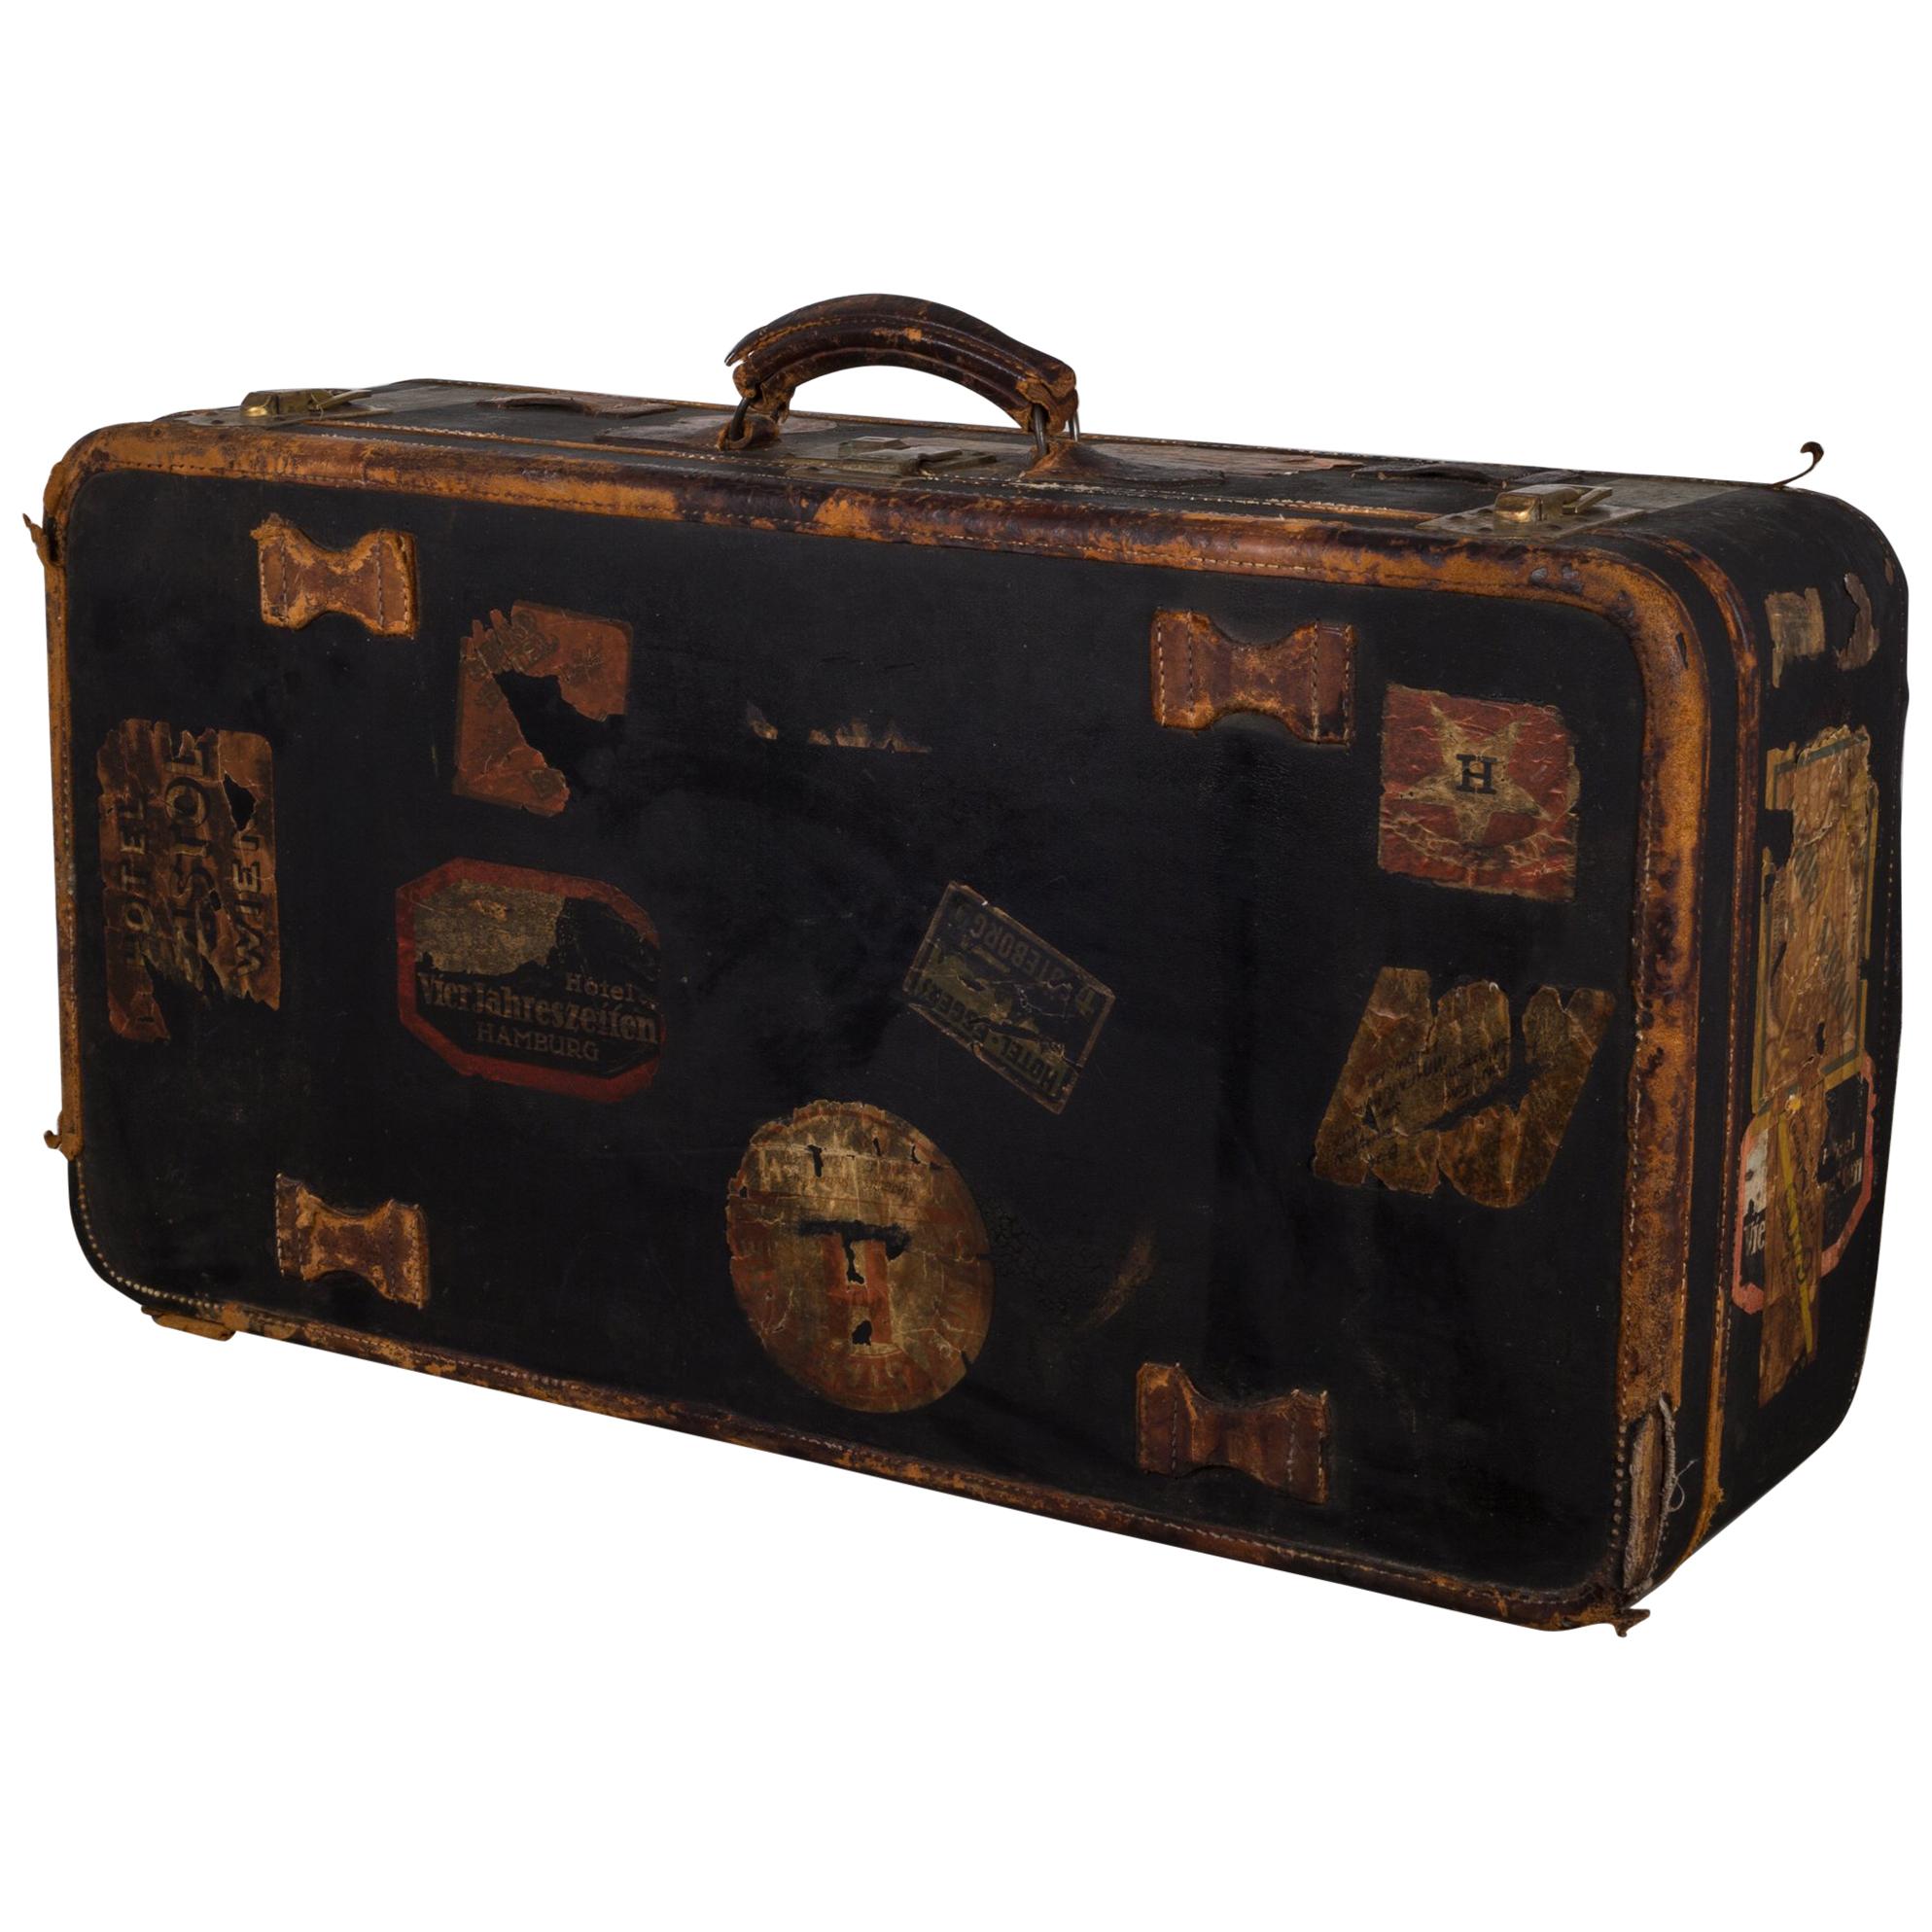 Antique Luggage with Original Travel Stickers, circa 1900-1930